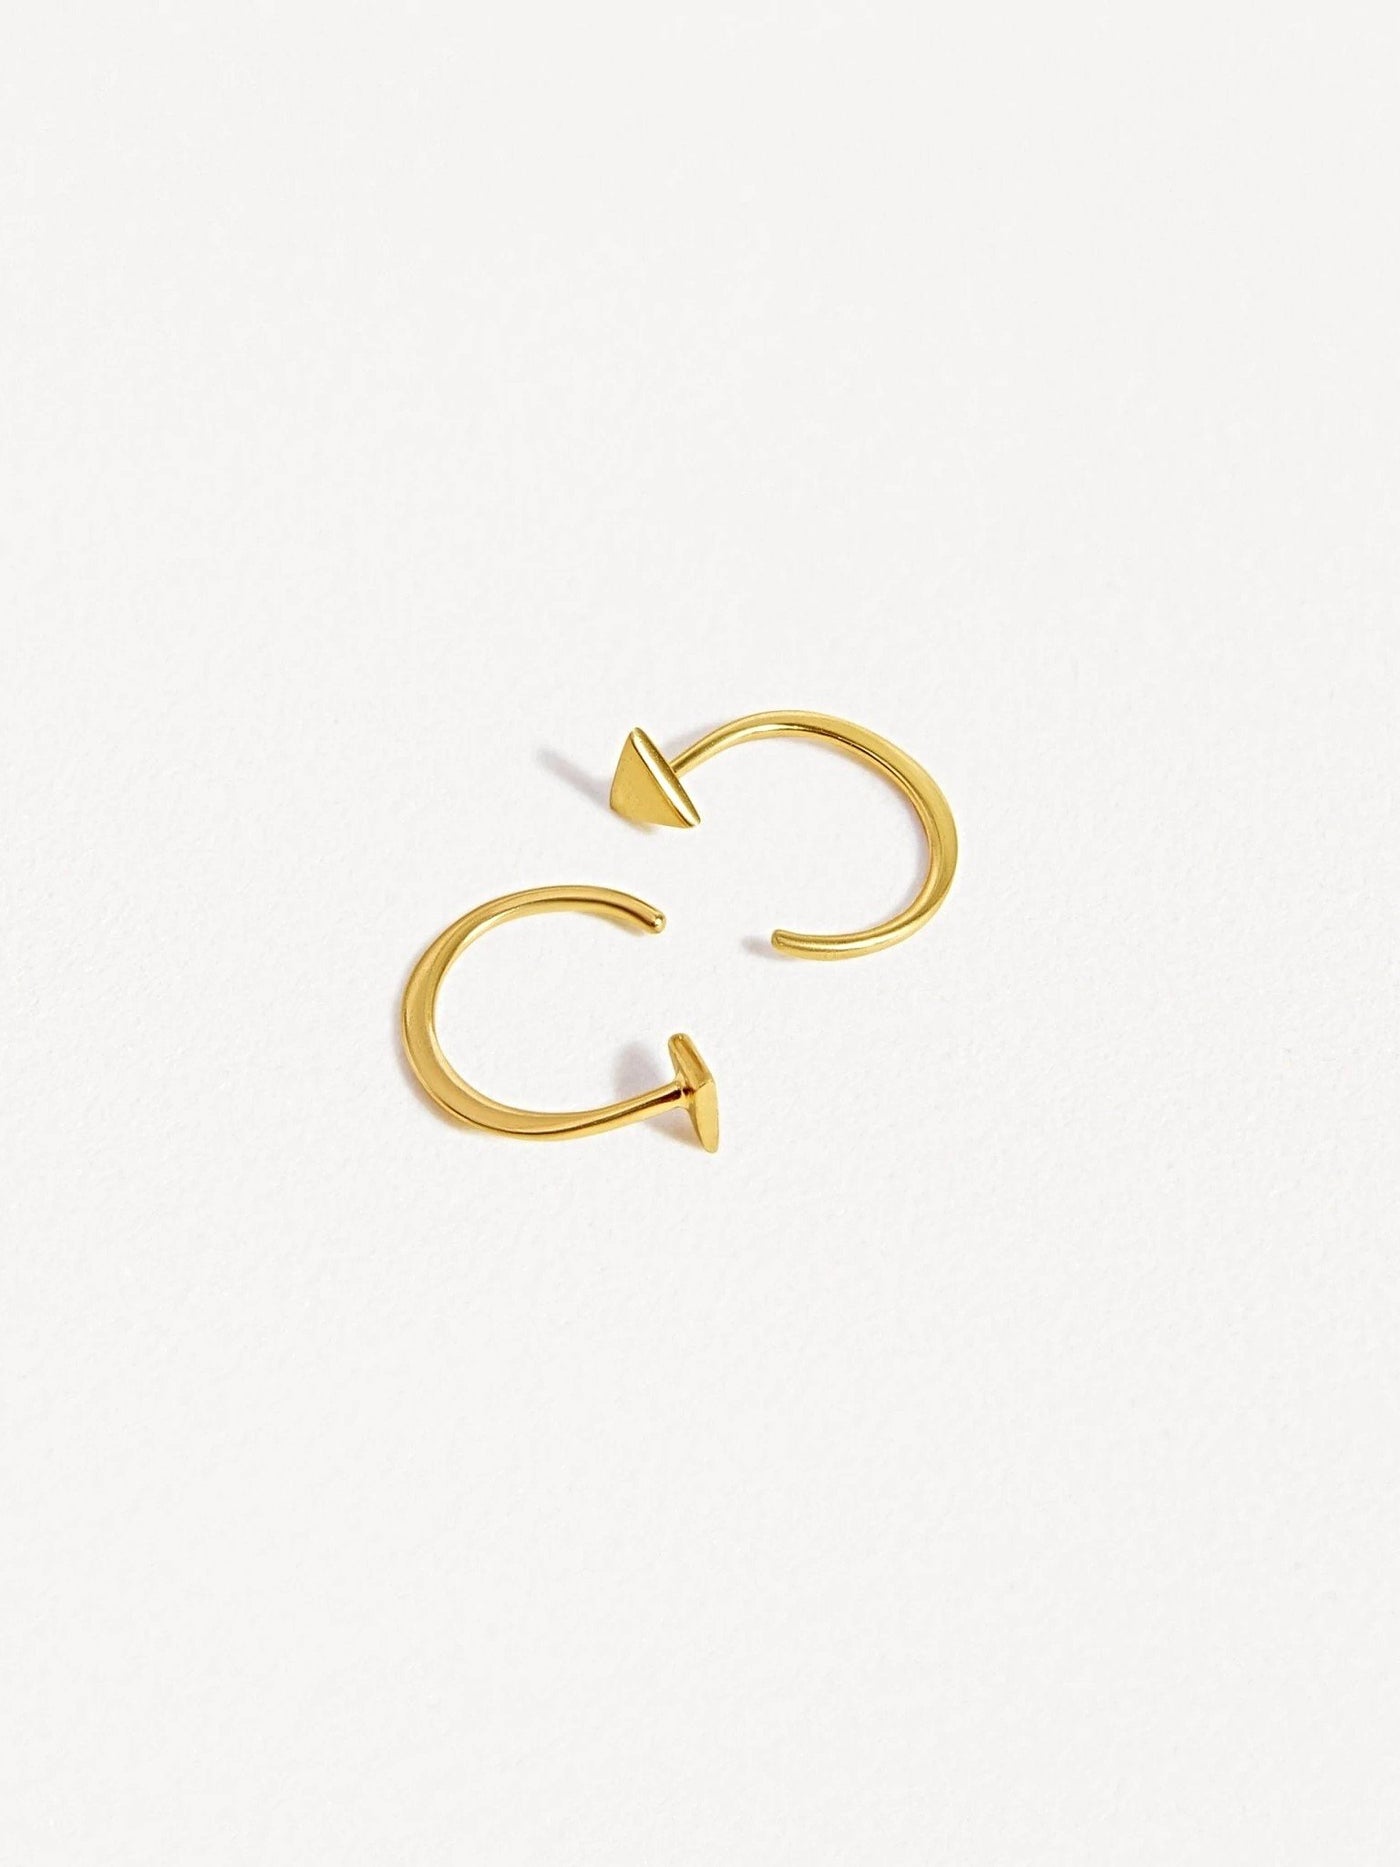 Vittoria Huggie Earrings - 24K Gold PlatedBackUpItemsBlack Friday JewelryLunai Jewelry